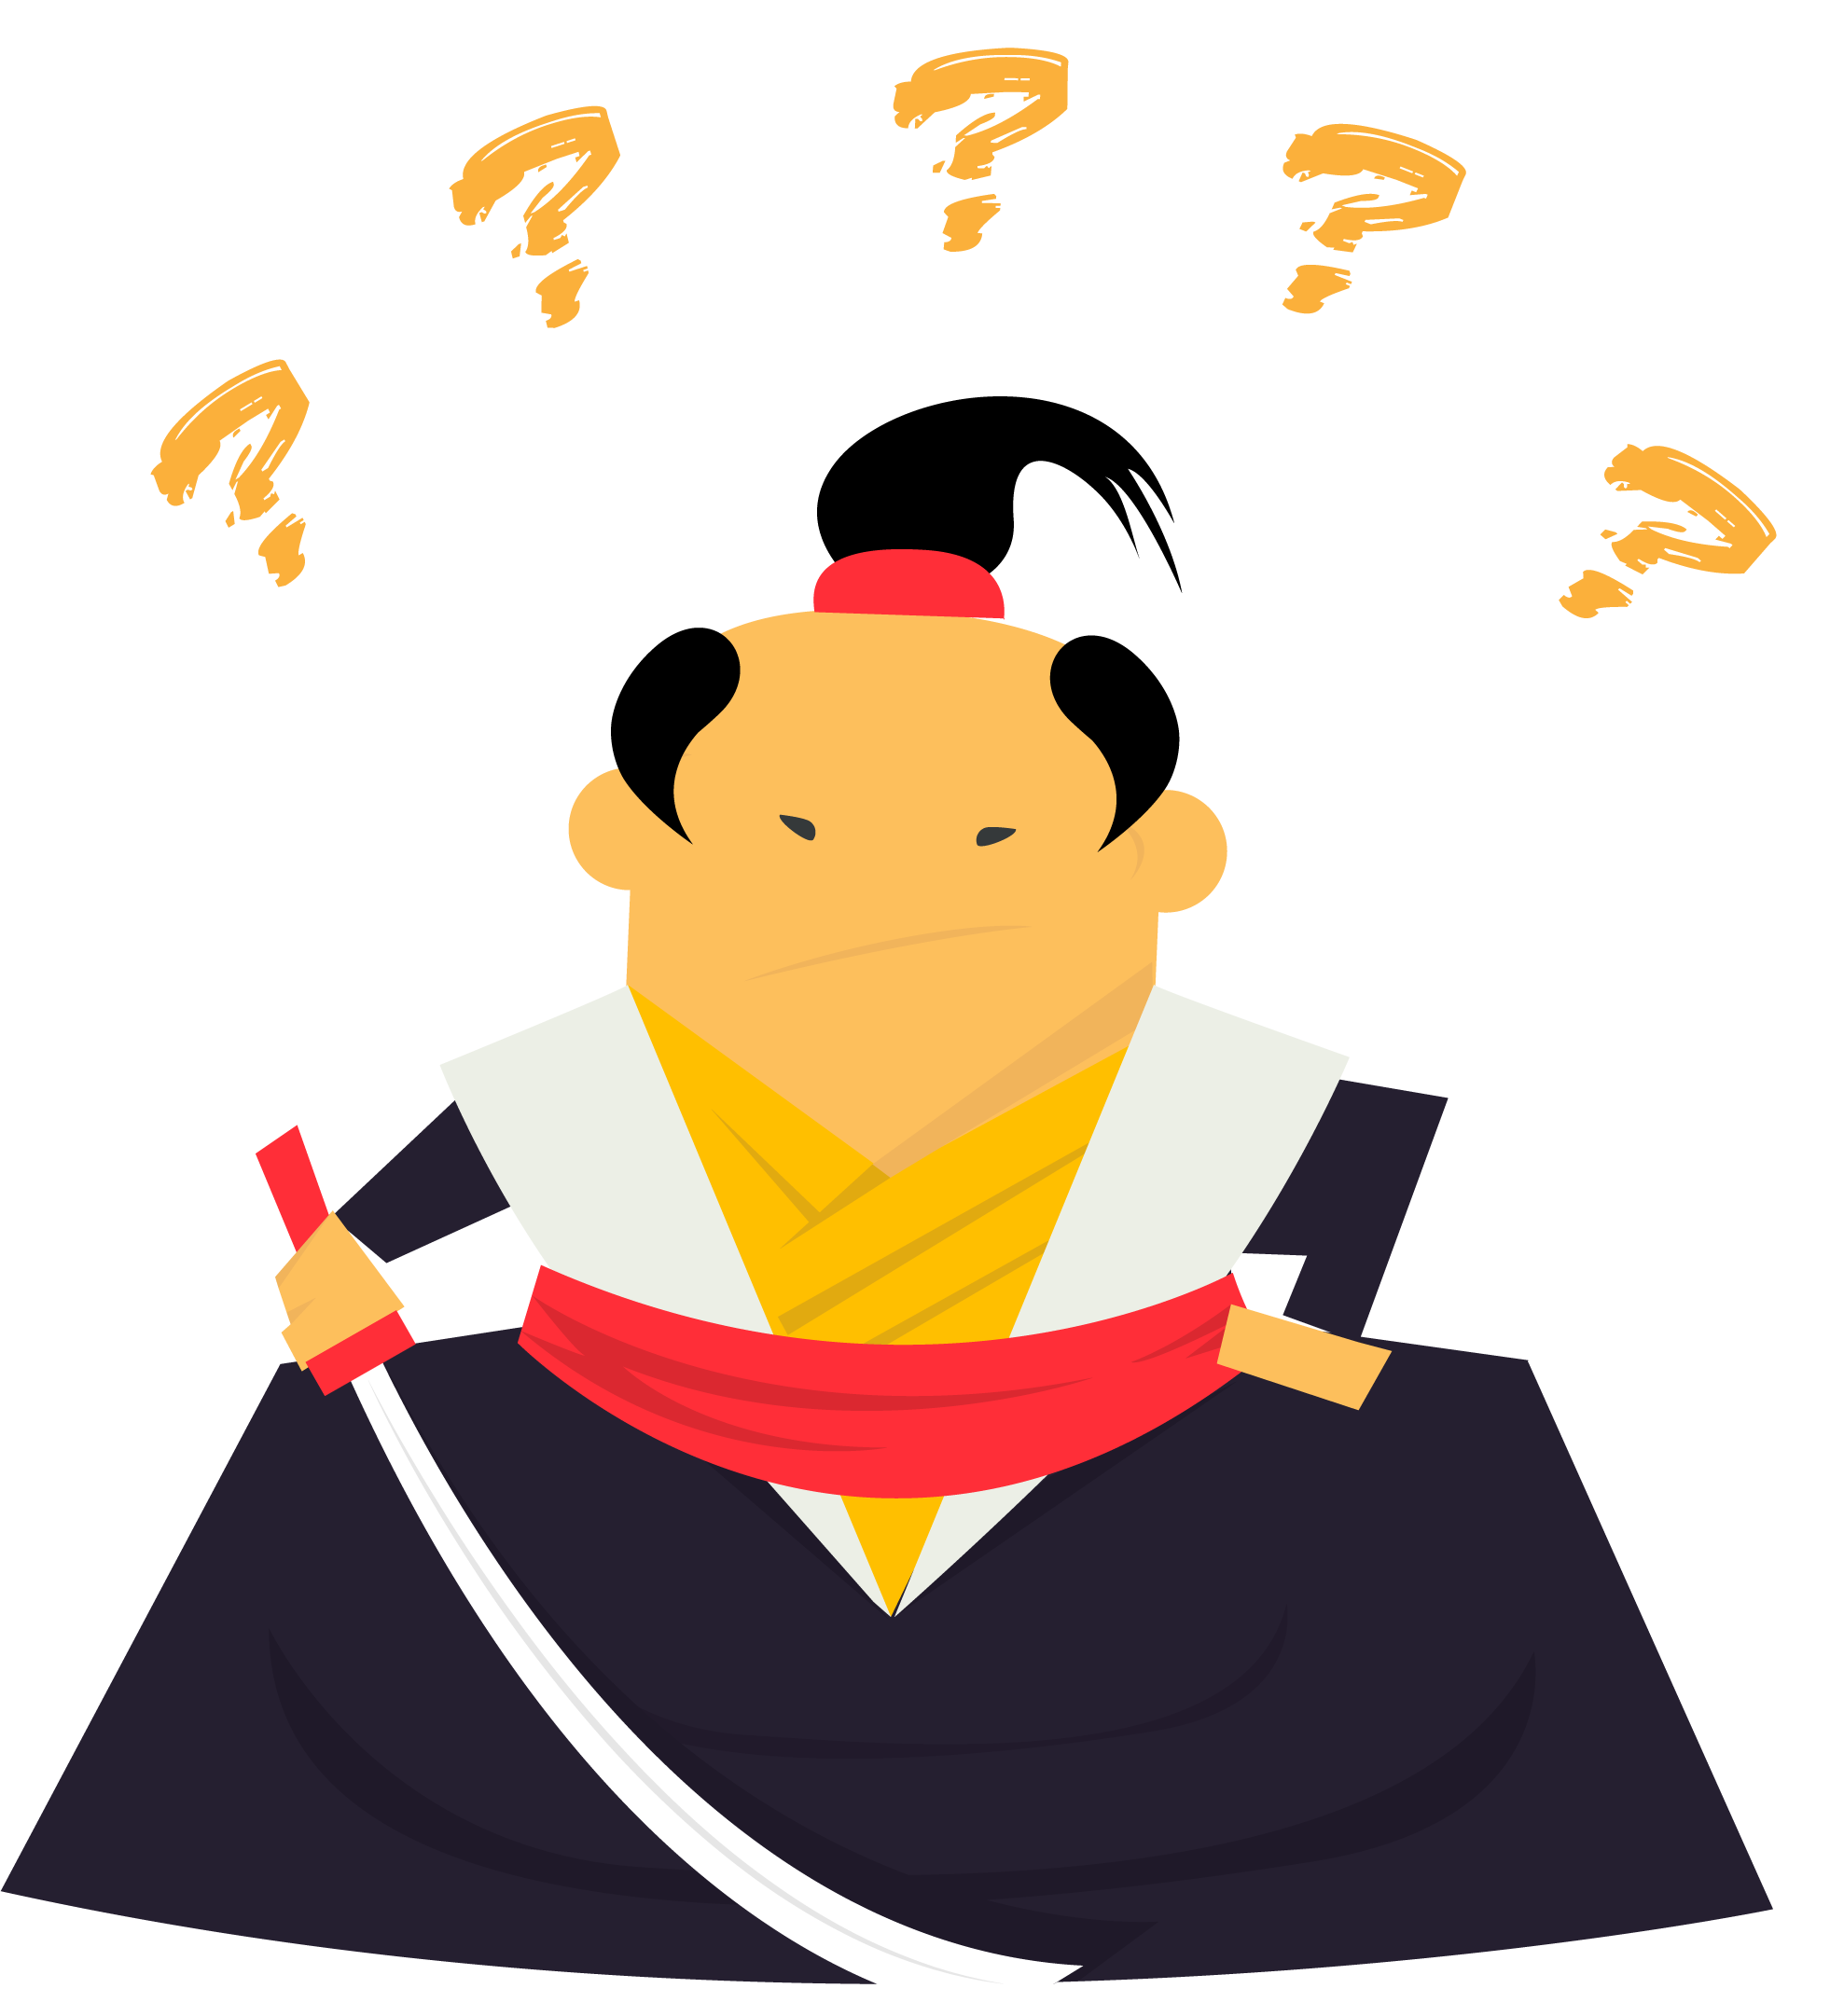 Samurai question face